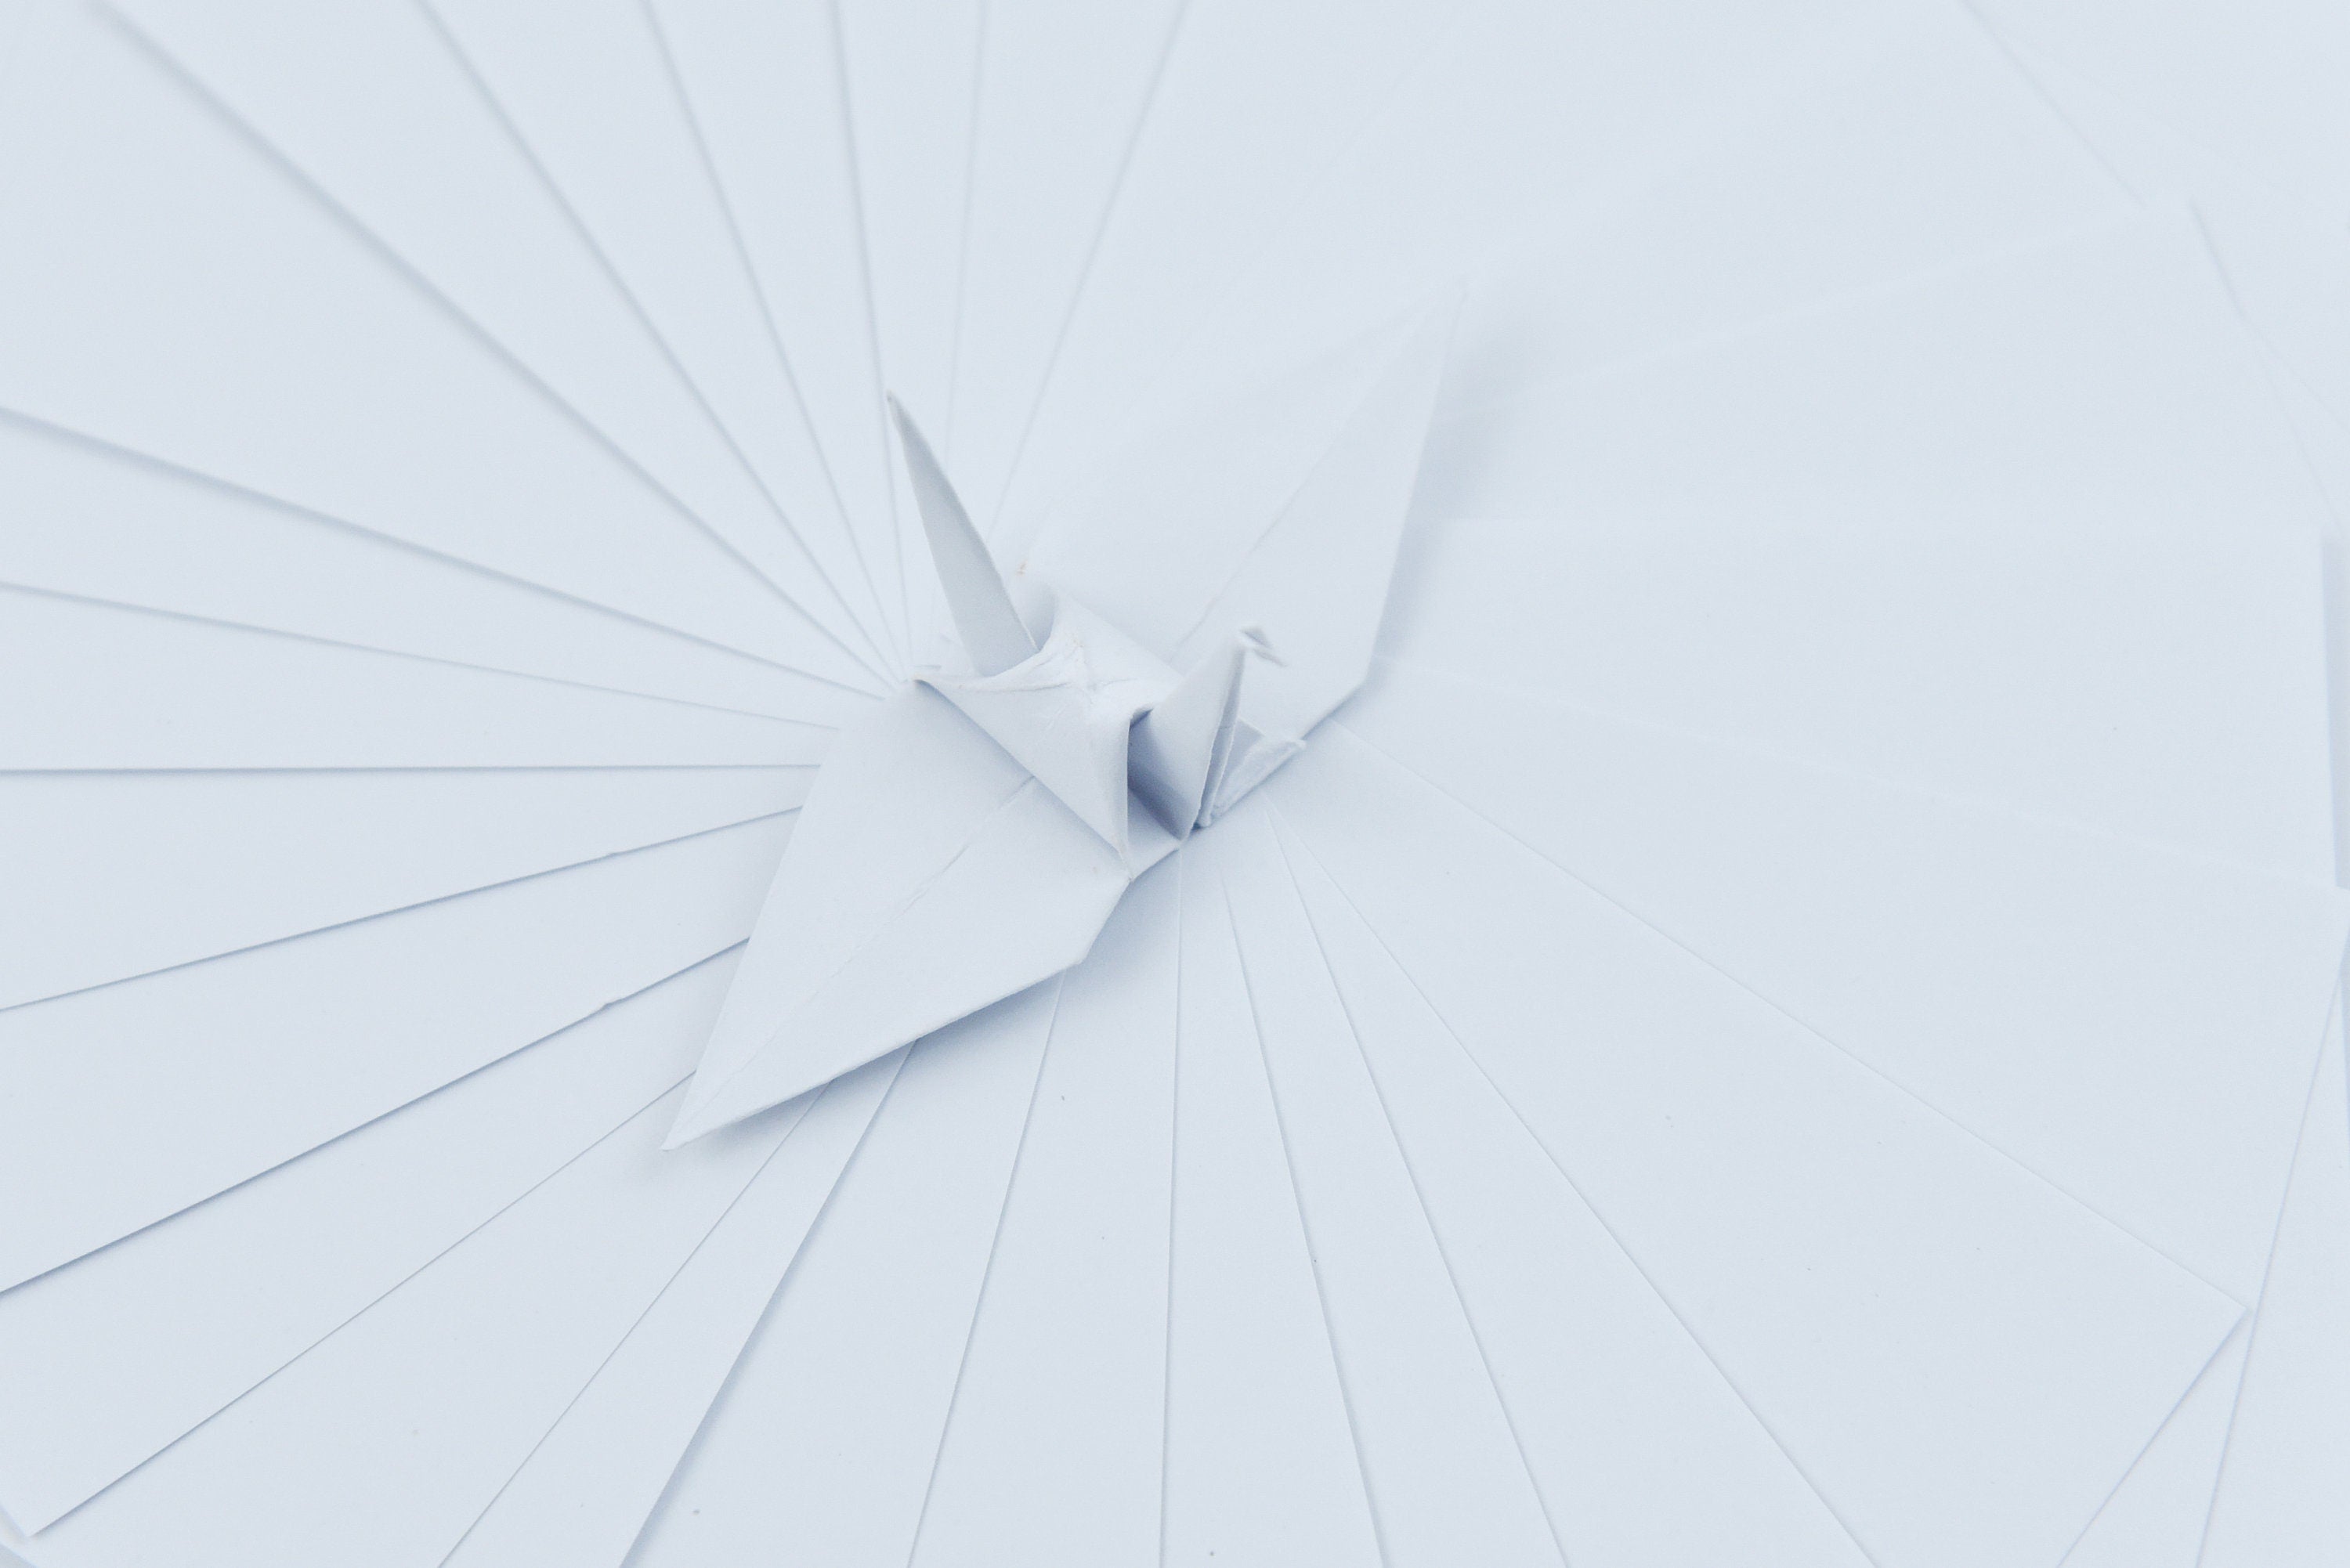 1000 fogli di carta origami bianchi - 3x3 pollici - Confezione di carta quadrata per piegare, gru origami e decorazioni